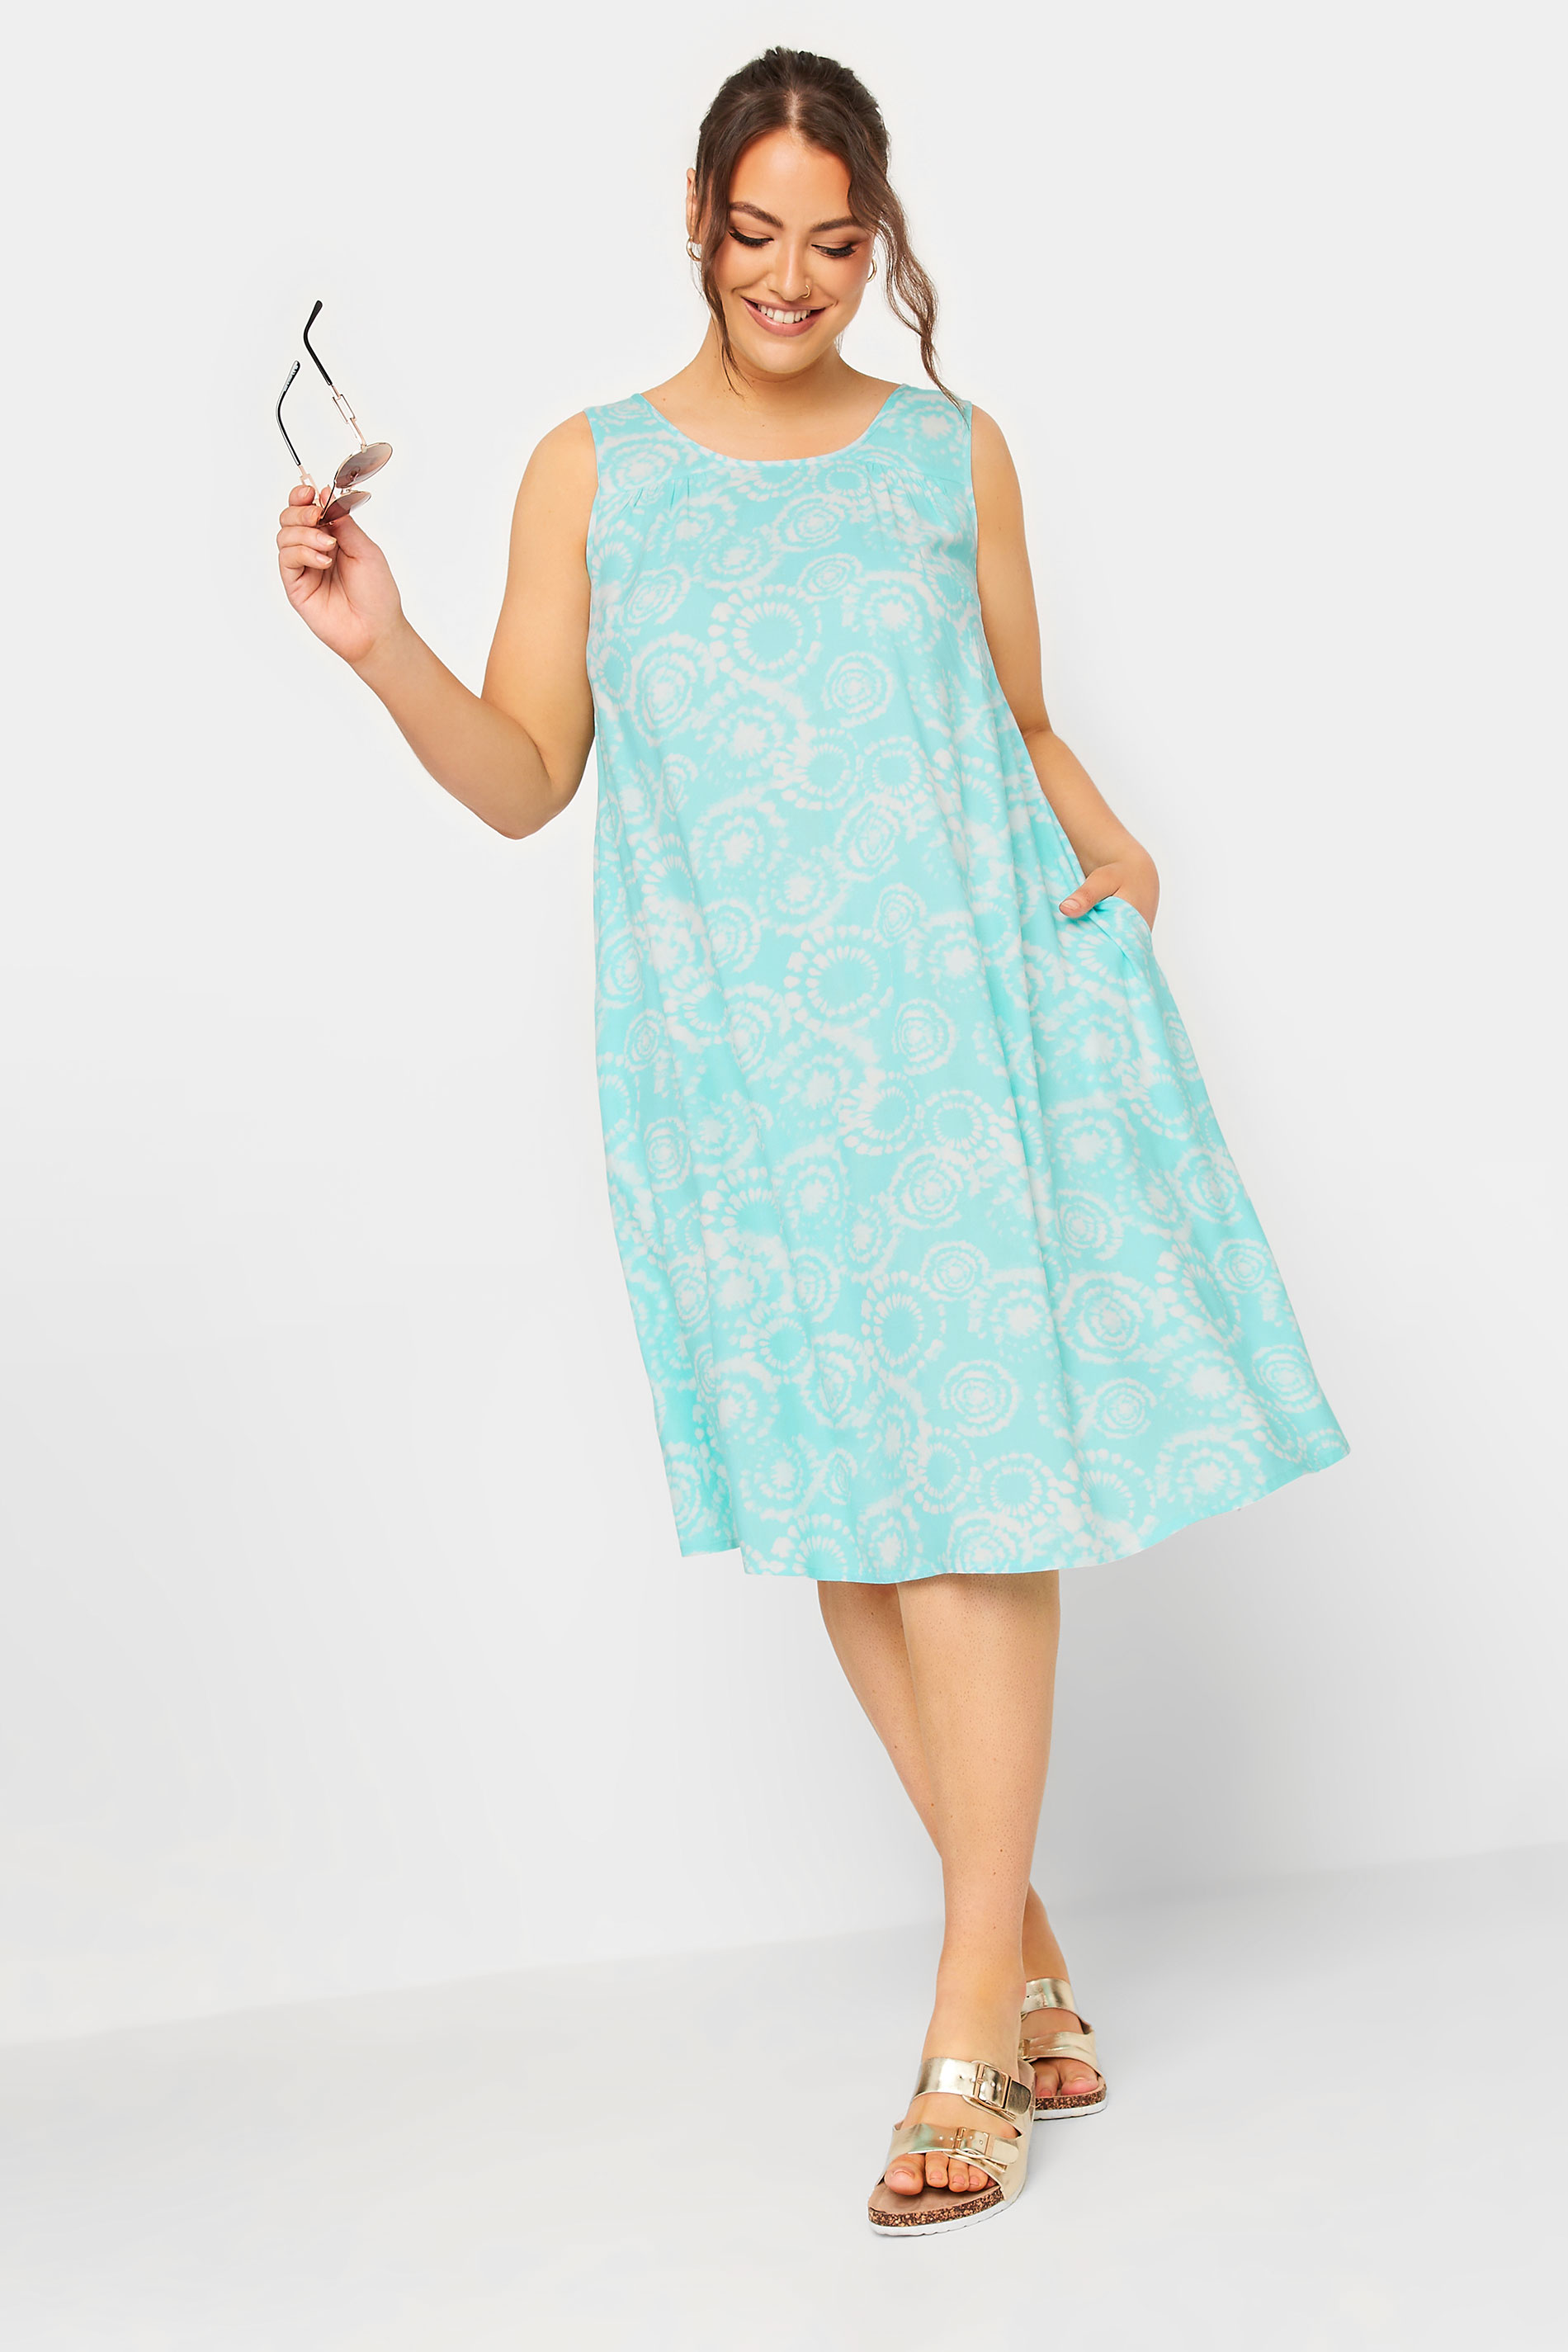 YOURS Plus Size Aqua Blue Tie Dye Print Swing Dress | Yours Clothing